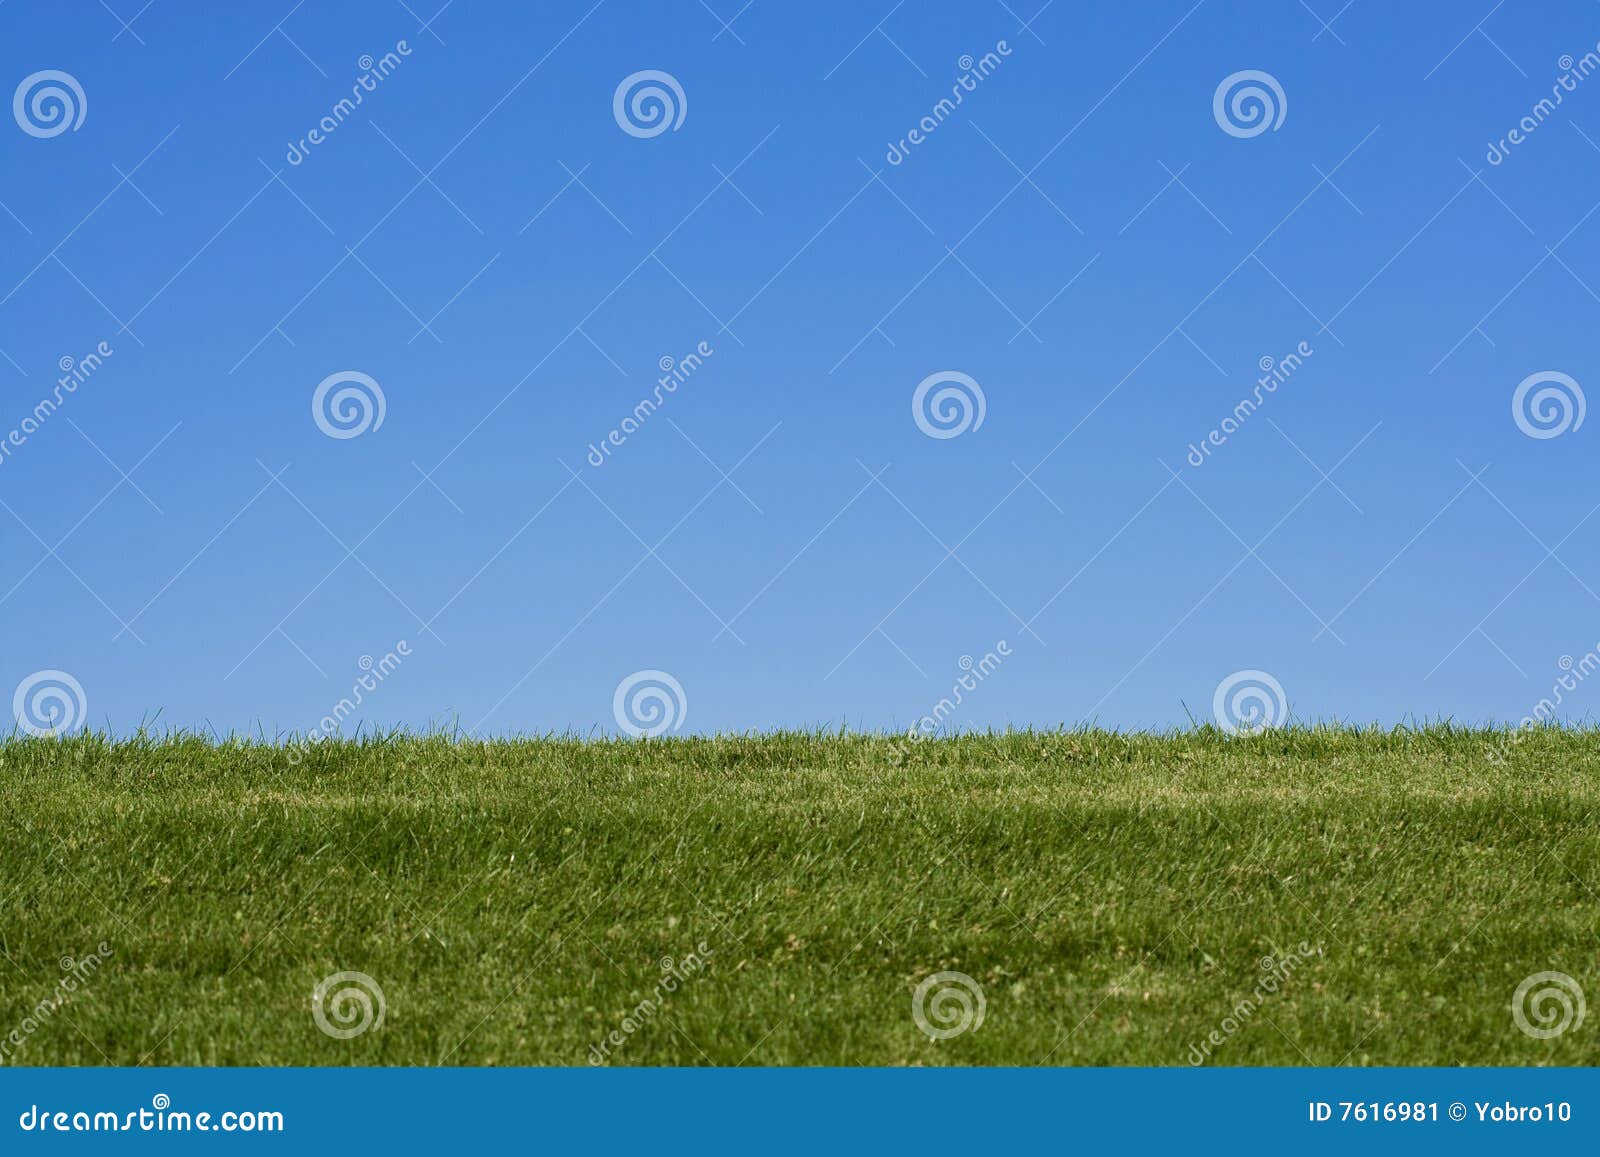 grassy hill background